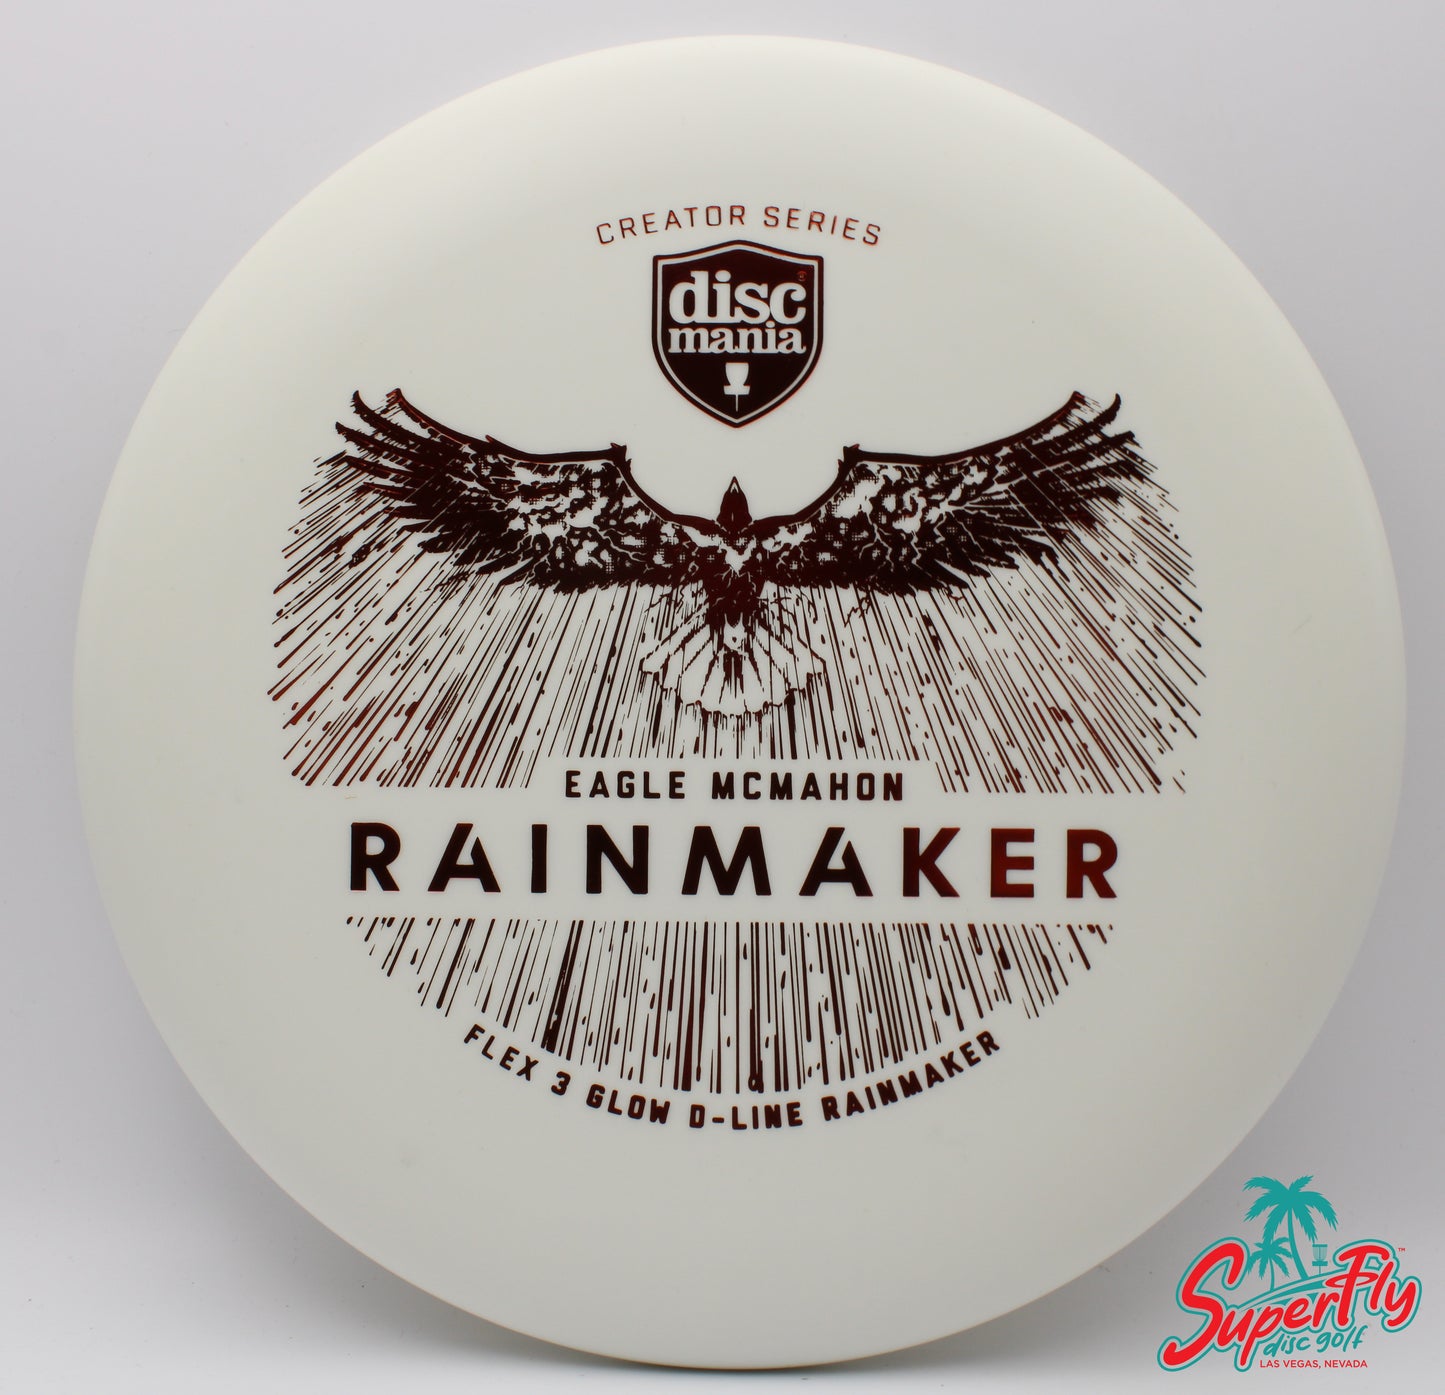 Discmania Eagle McMahon Creator Series Glow D-Line Rainmaker (FLEX 3)